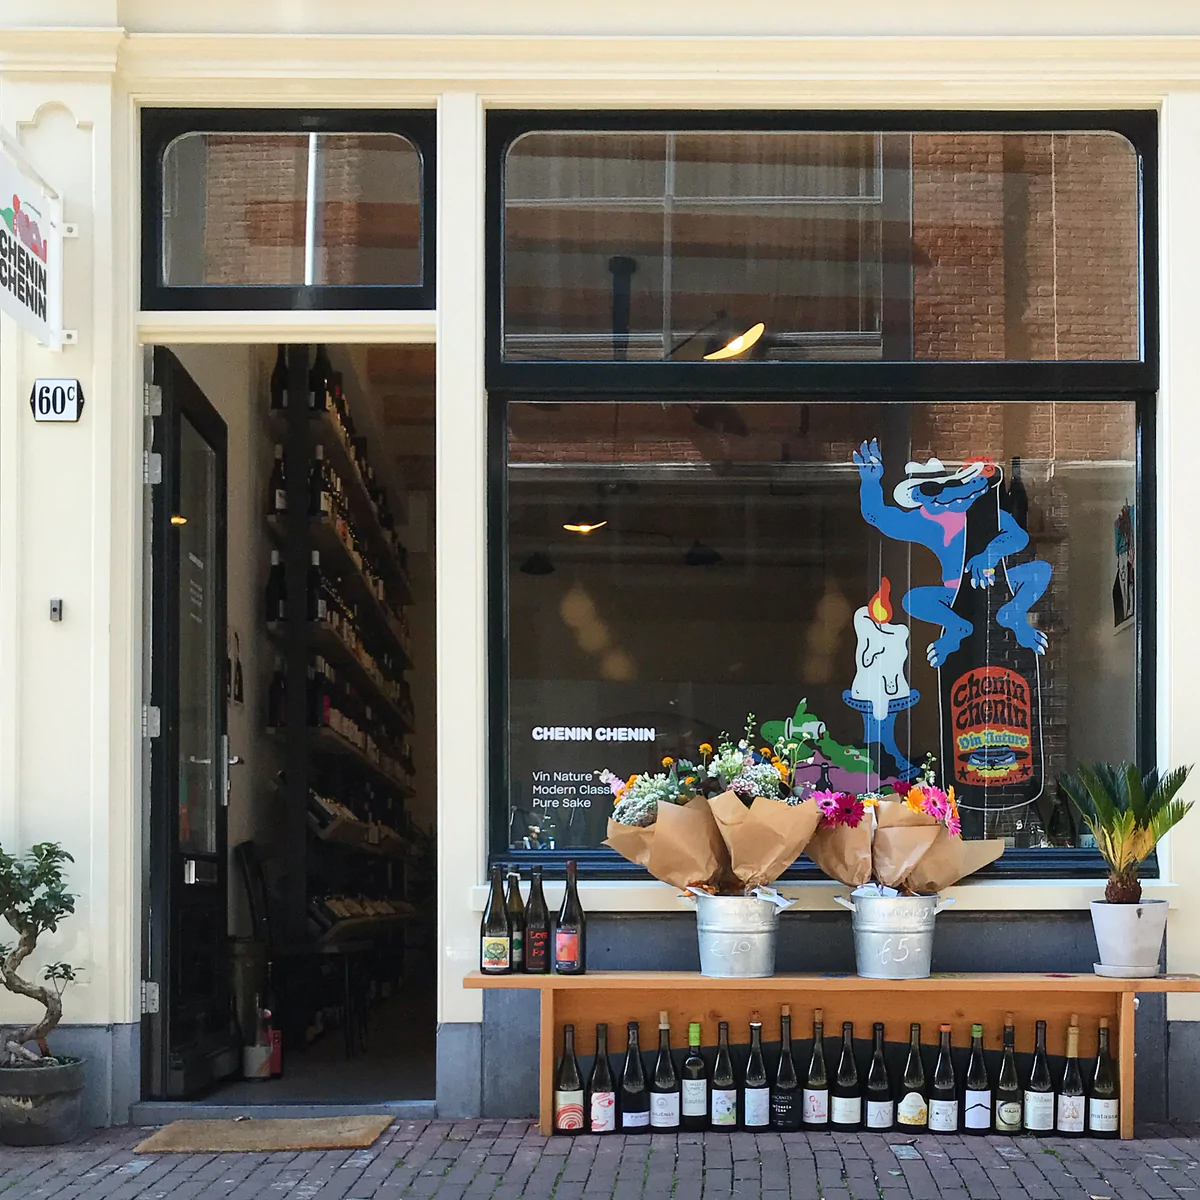 Chenin Chenin, natural wine shop in Amsterdam, the Netherlands